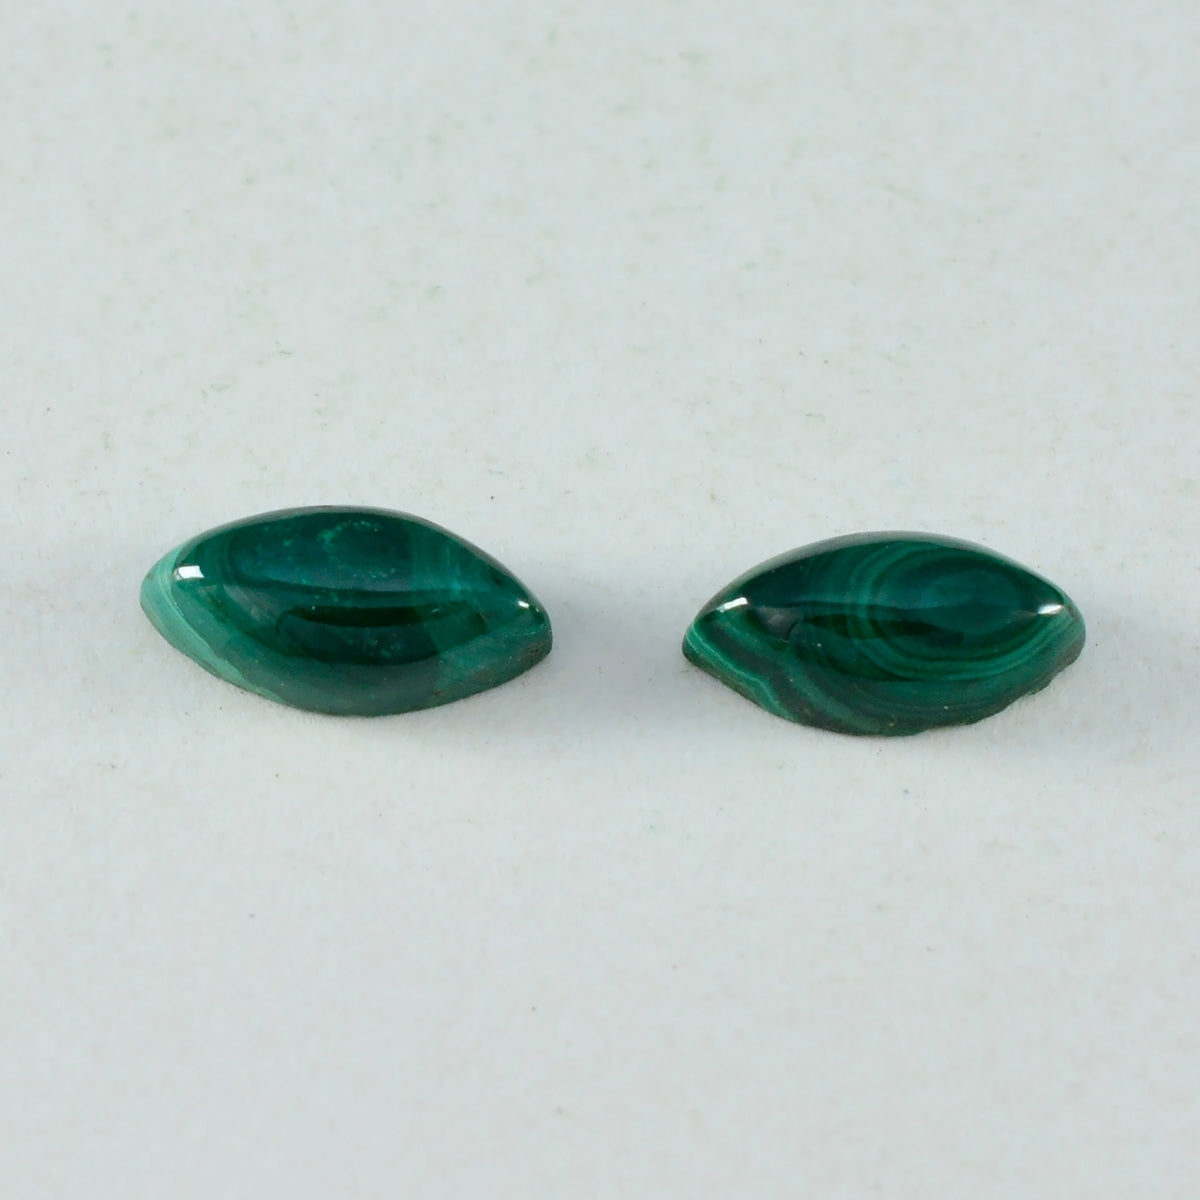 Riyogems 1PC Green Malachite Cabochon 6x12 mm Marquise Shape astonishing Quality Gems